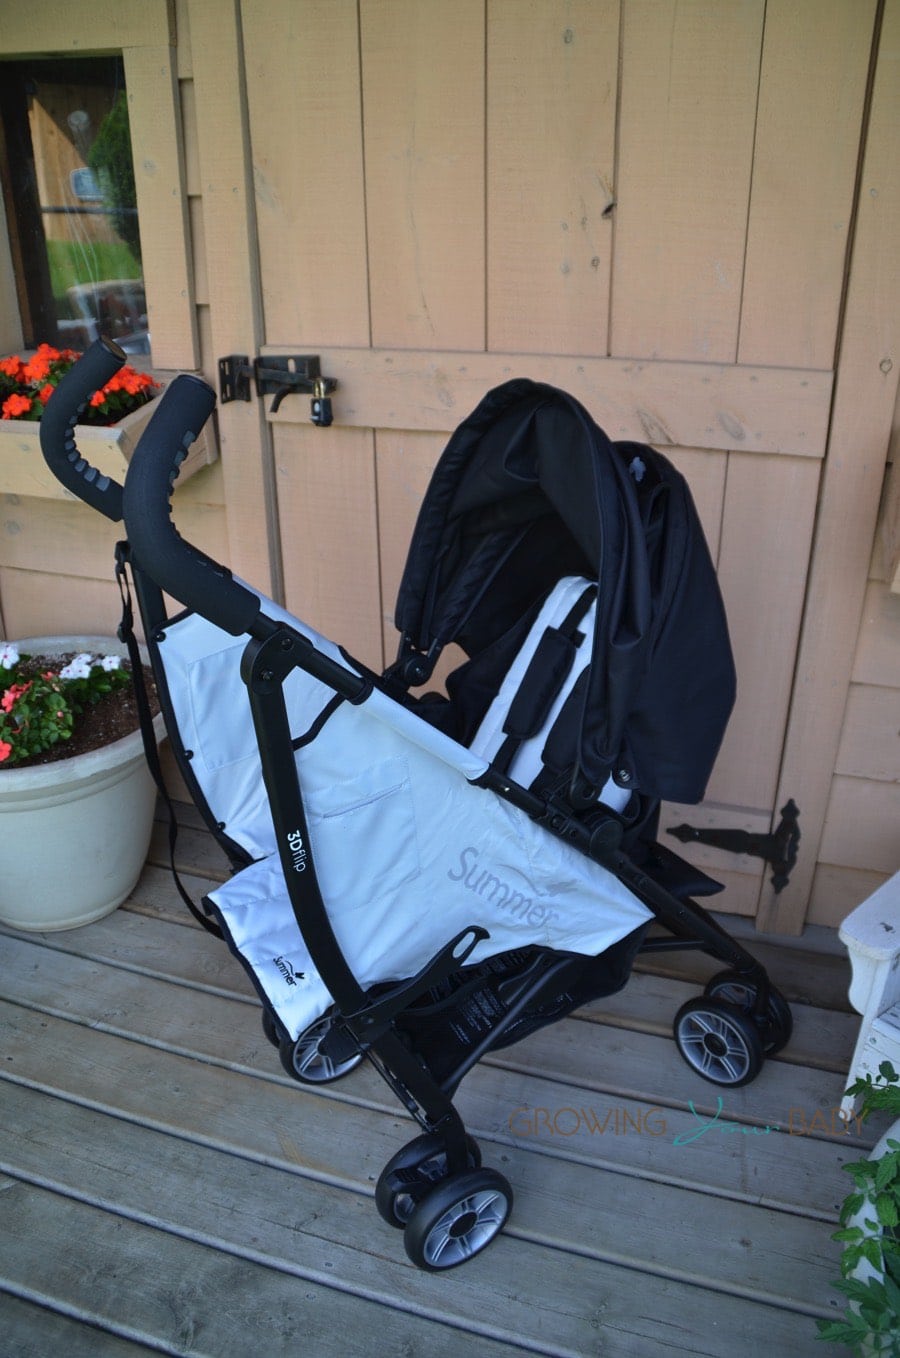 summer infant flip stroller